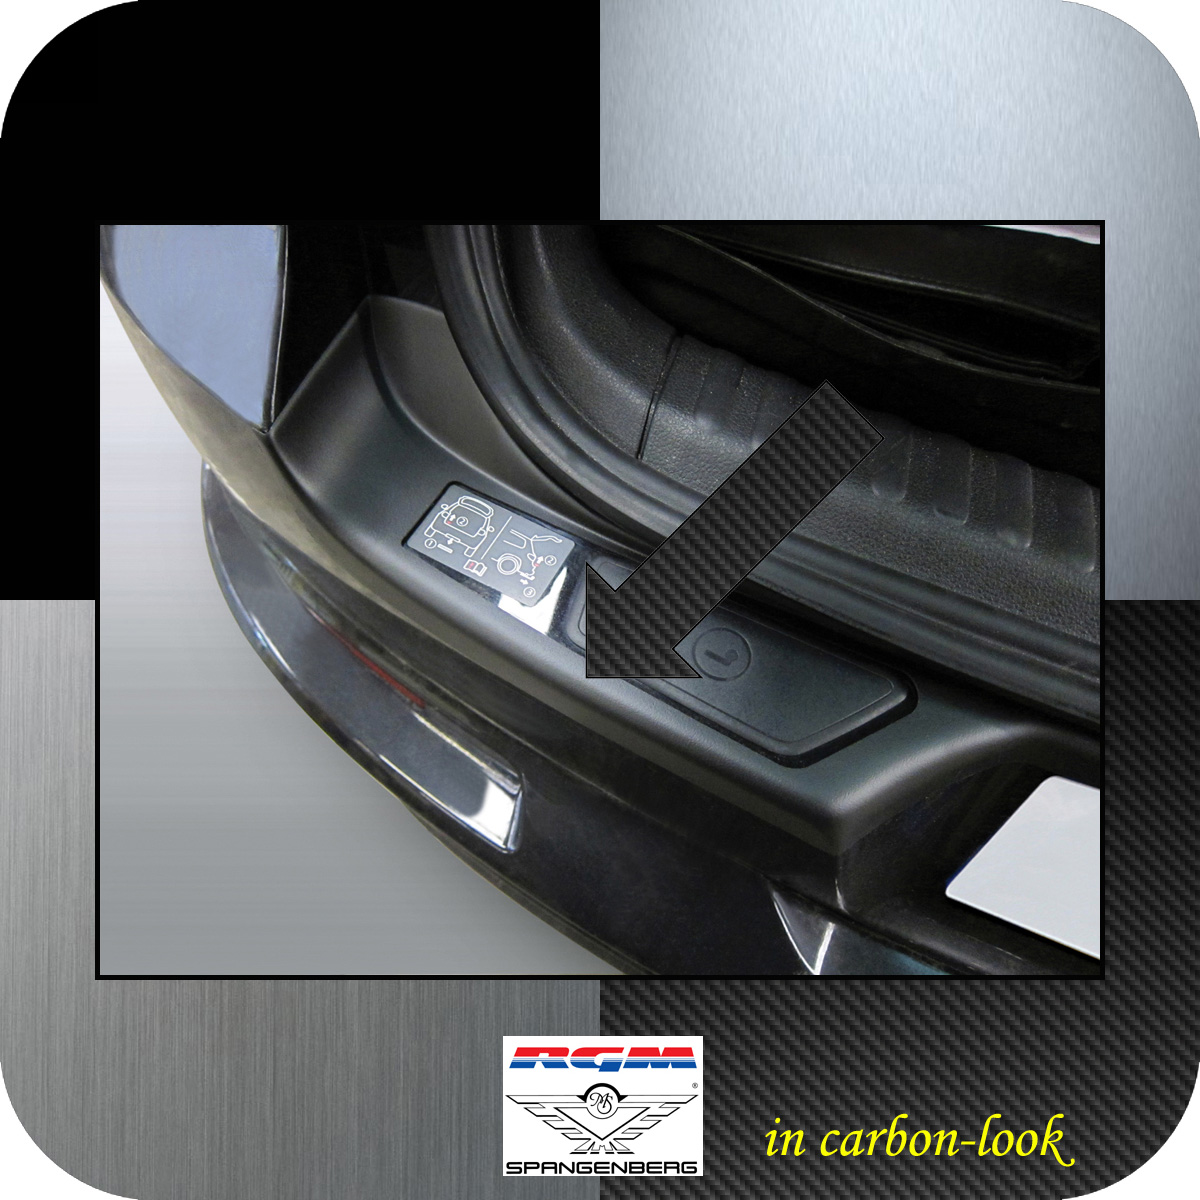 Ladekantenschutz Carbon-Look VW Tiguan SUV schwenkbare Kupplung 2007-16 3509741